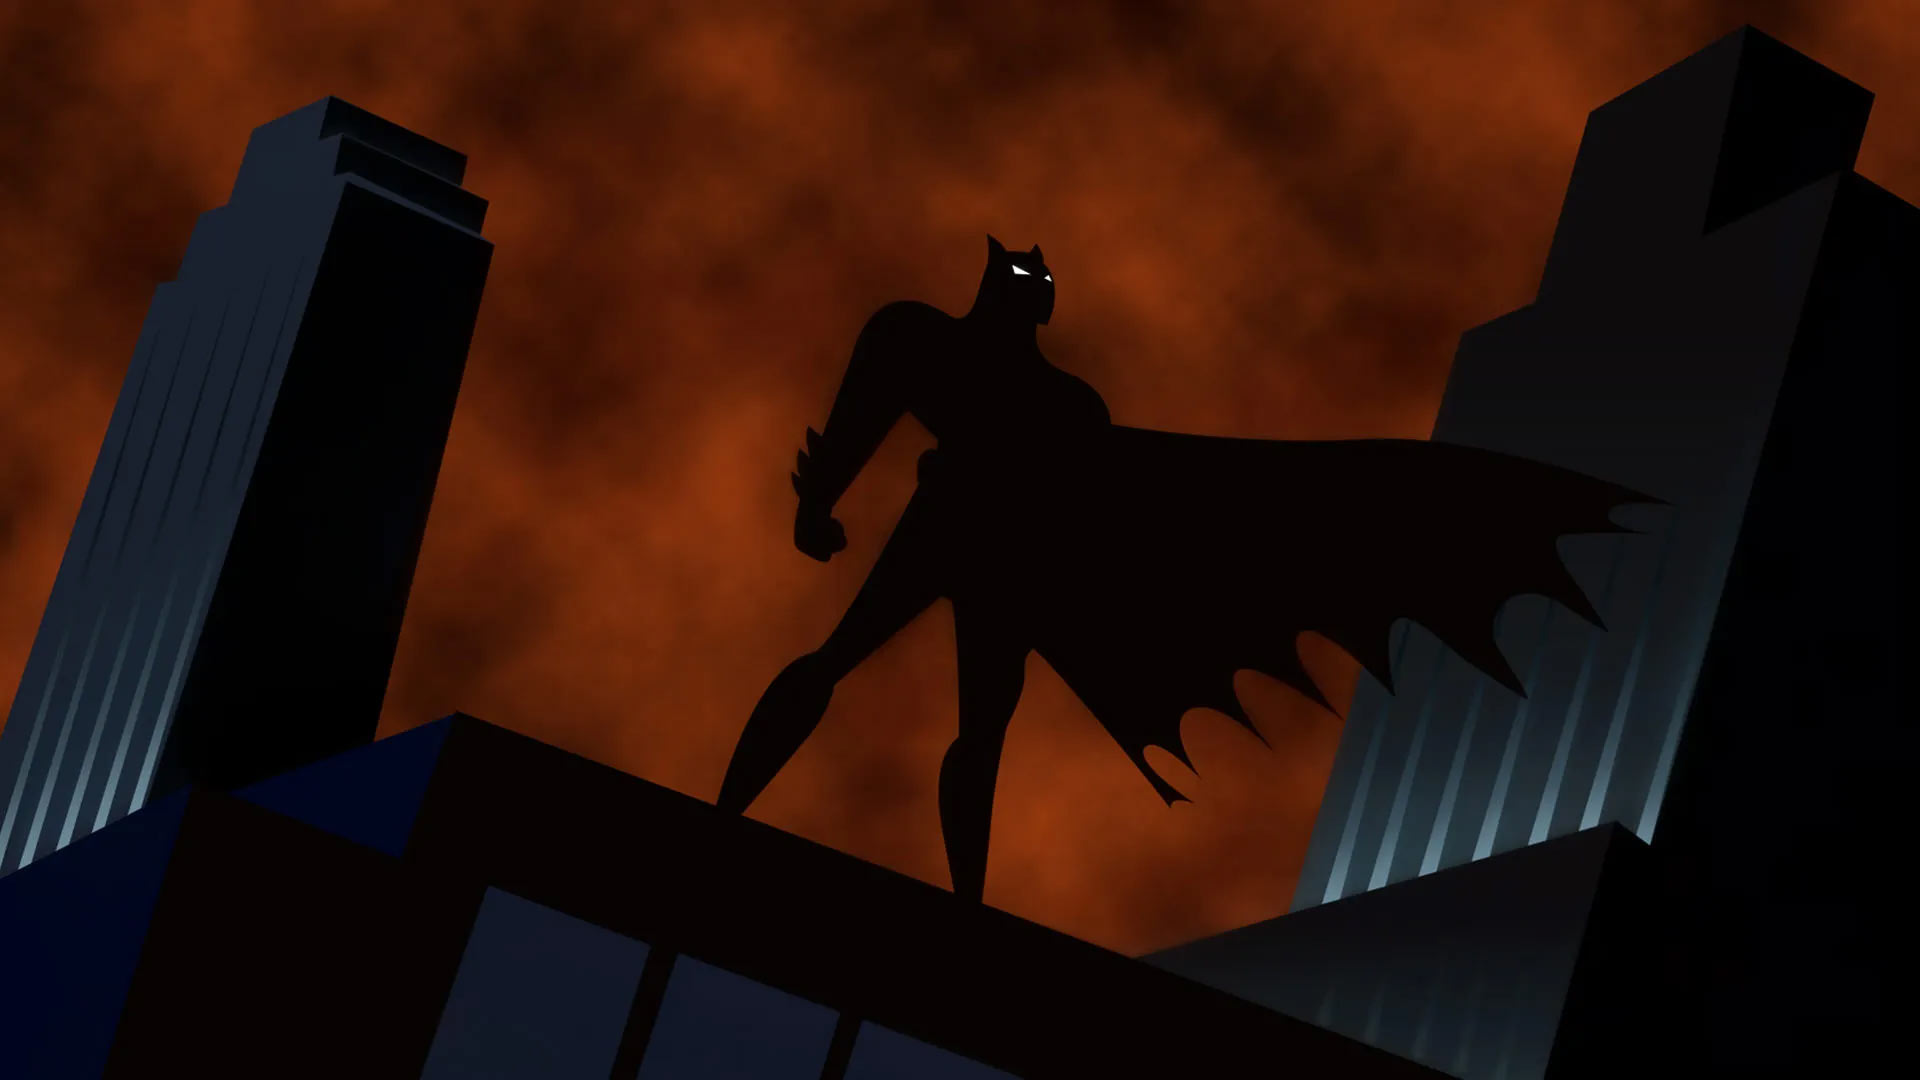 Batman - The Animated Series